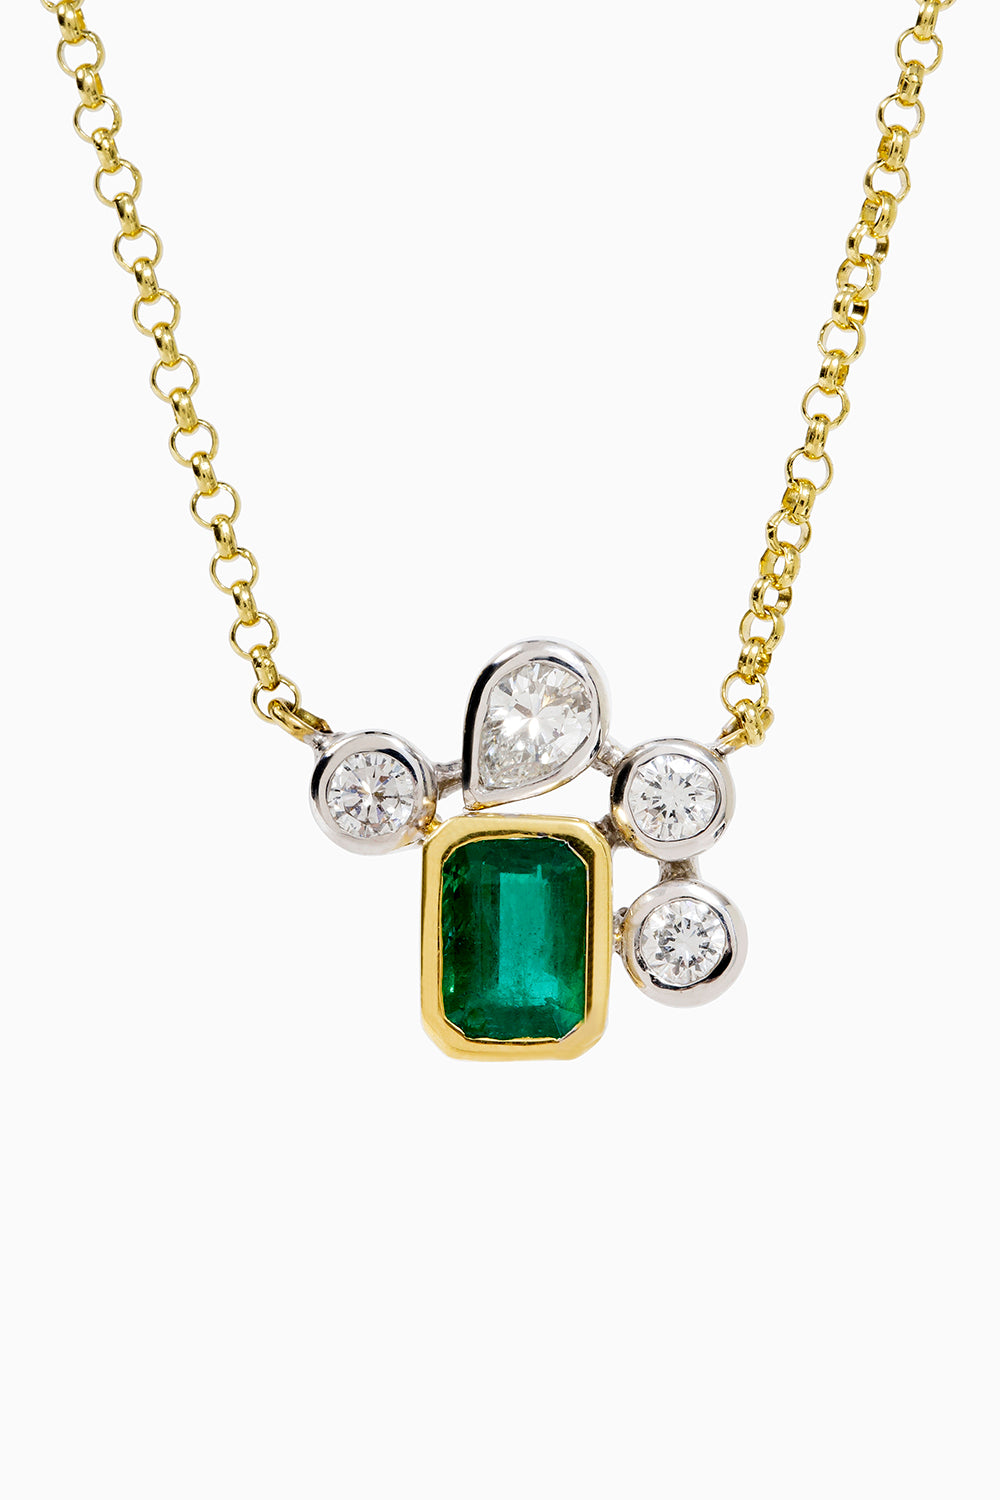 Emerald and diamonds pendant necklace